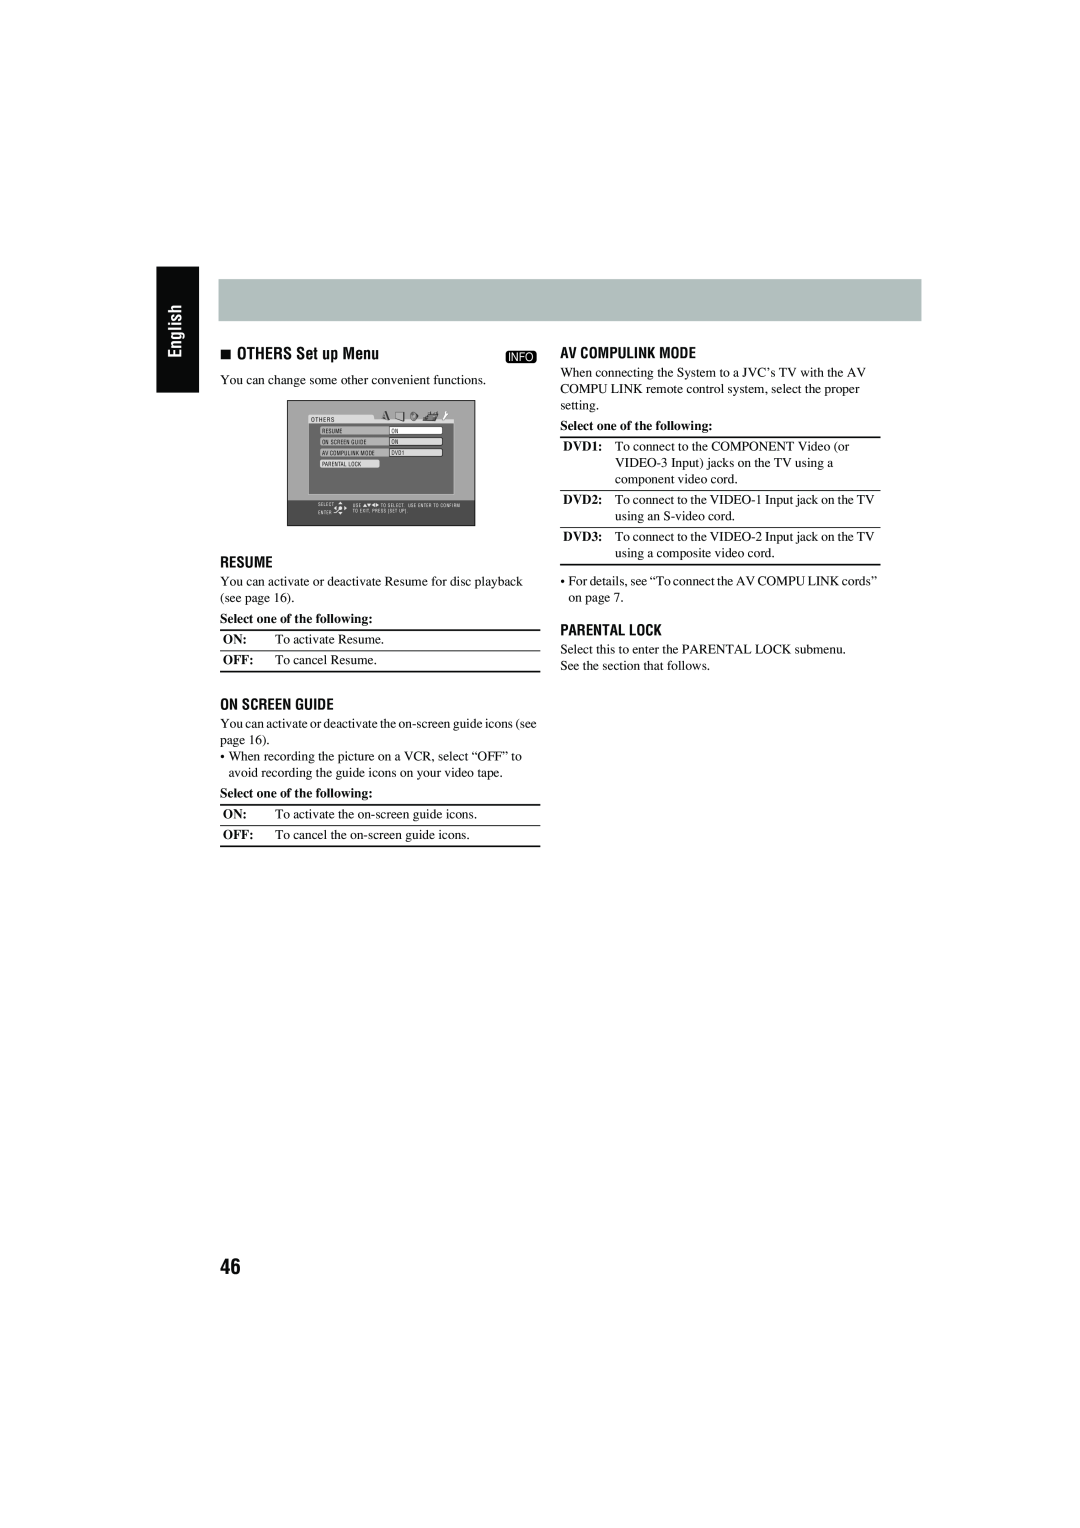 JVC CA-MXJD8UW manual English, OTHERS Set up Menu, Resume, On Screen Guide, Av Compulink Mode, Parental Lock 